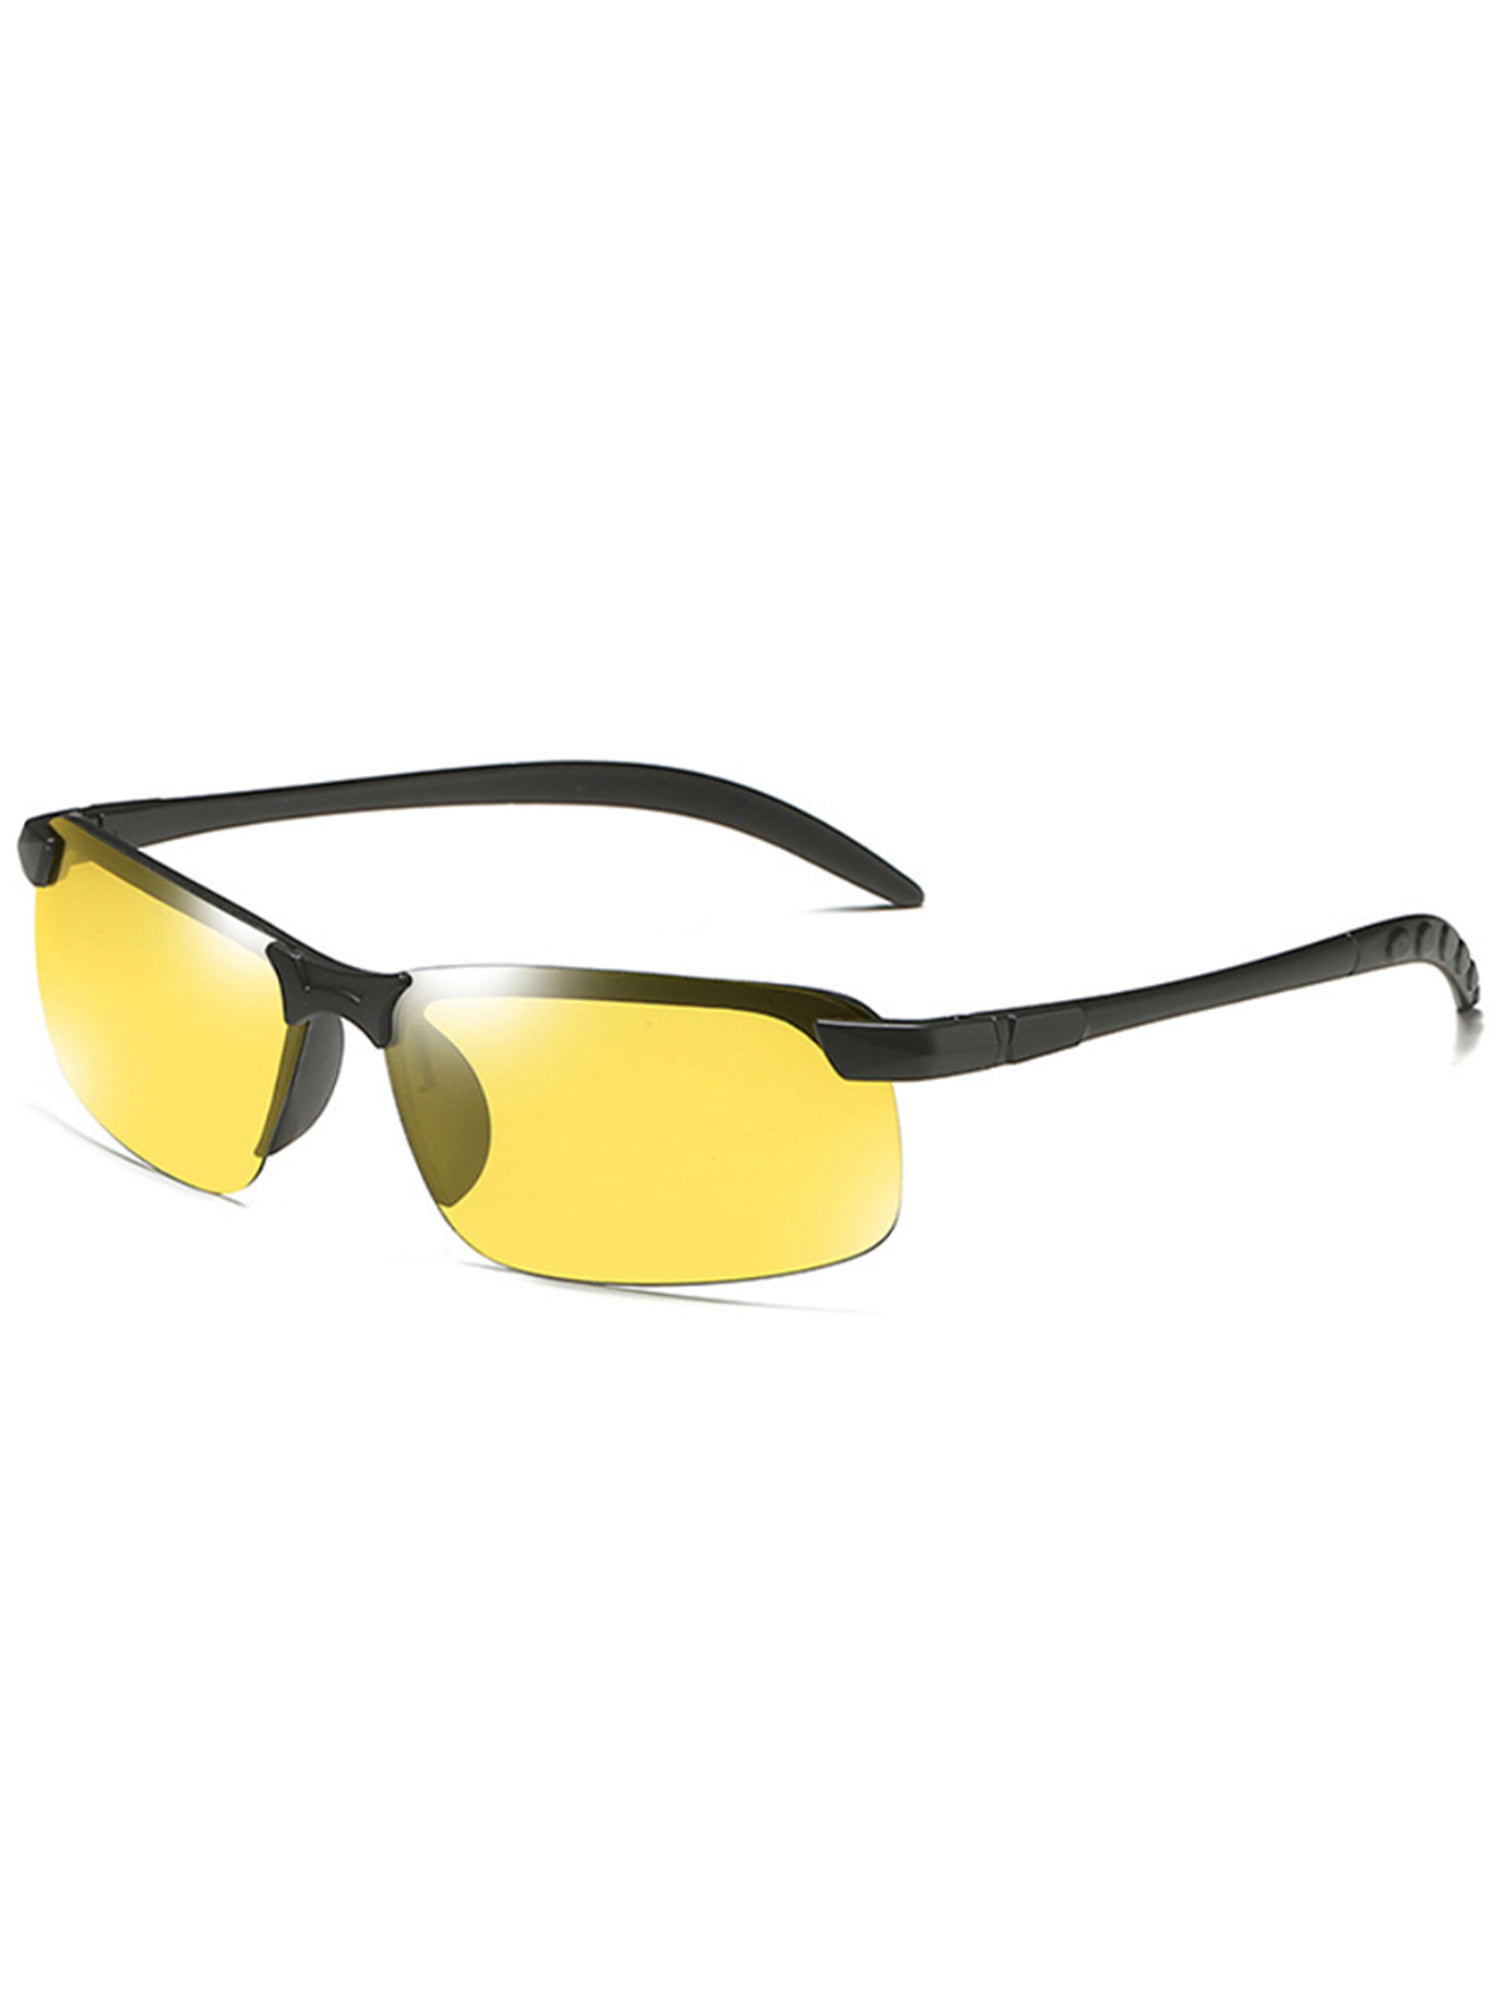 Men Photochromic Polarized Sunglasses Day and Night UV400 Driving Sports Glasses 